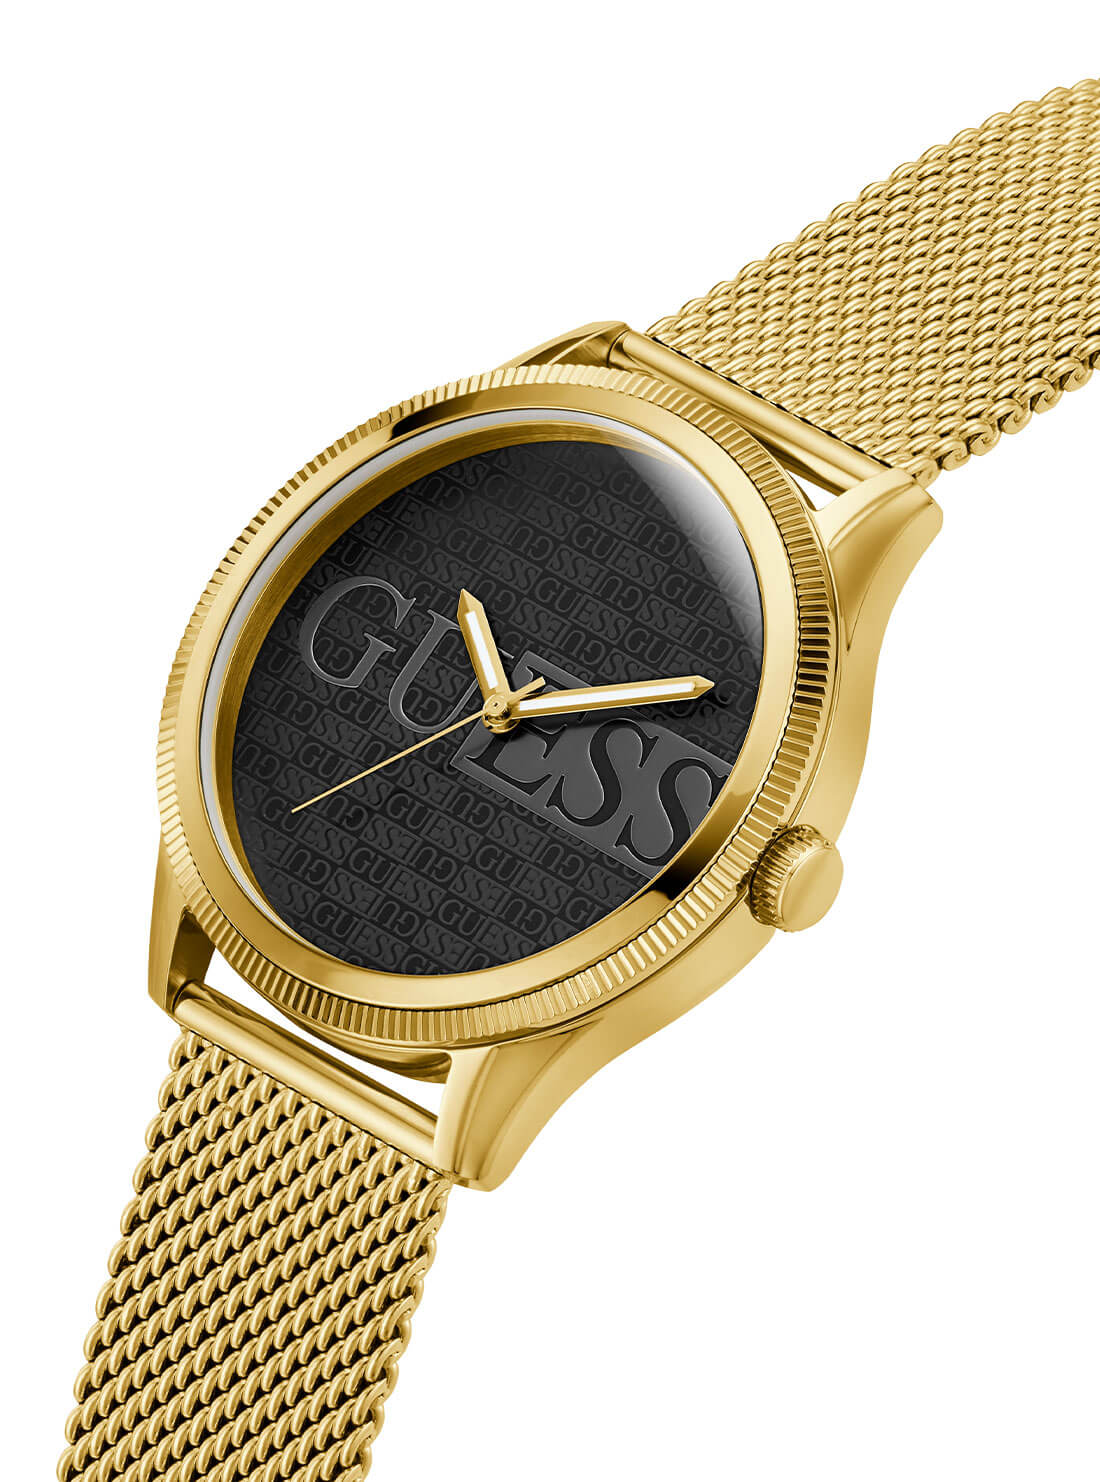 Gold Reputation Black Logo Mesh Watch | GUESS Men's Watches | detail view